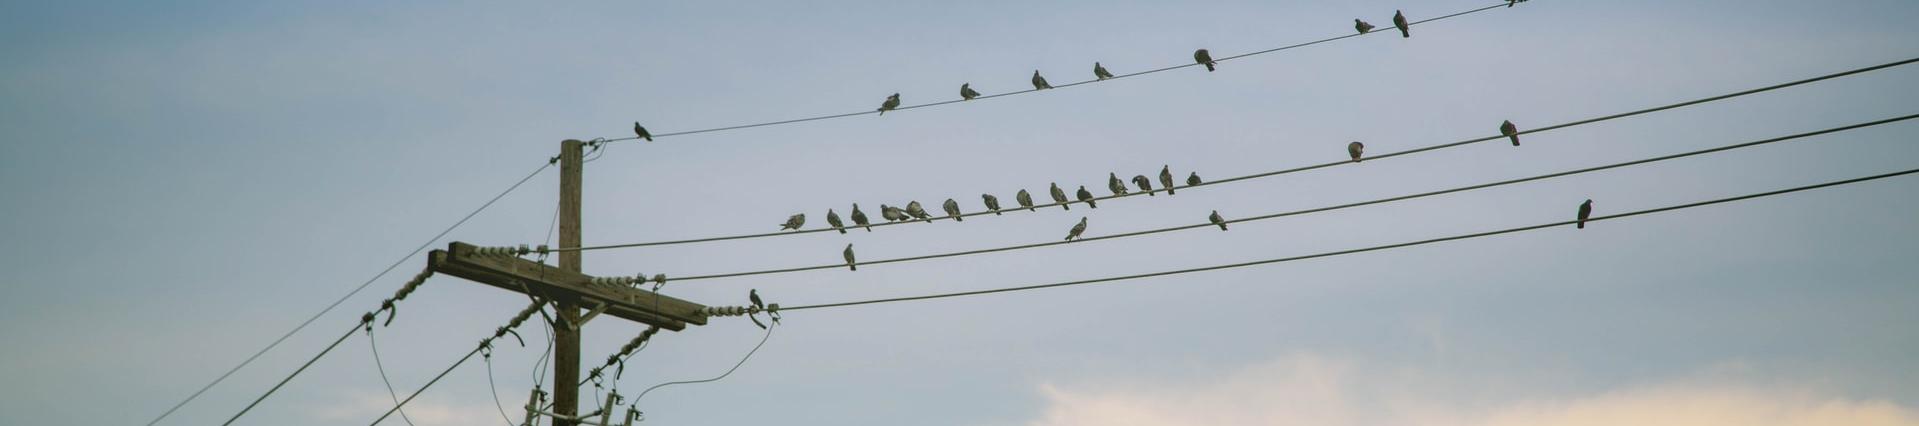 Birds on Power Line